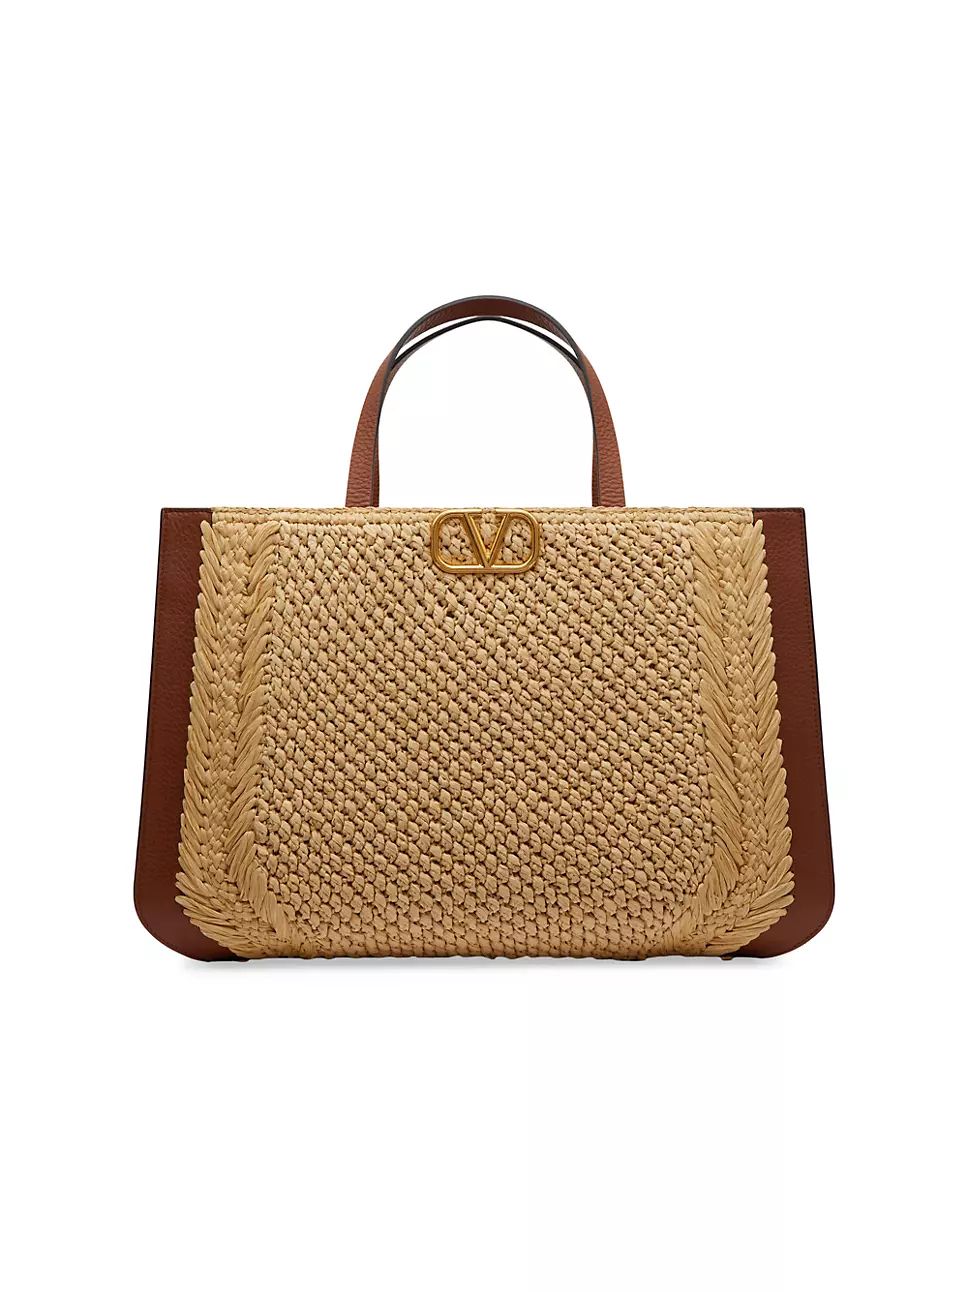 VLogo Signature Raffia Tote Handbag | Saks Fifth Avenue